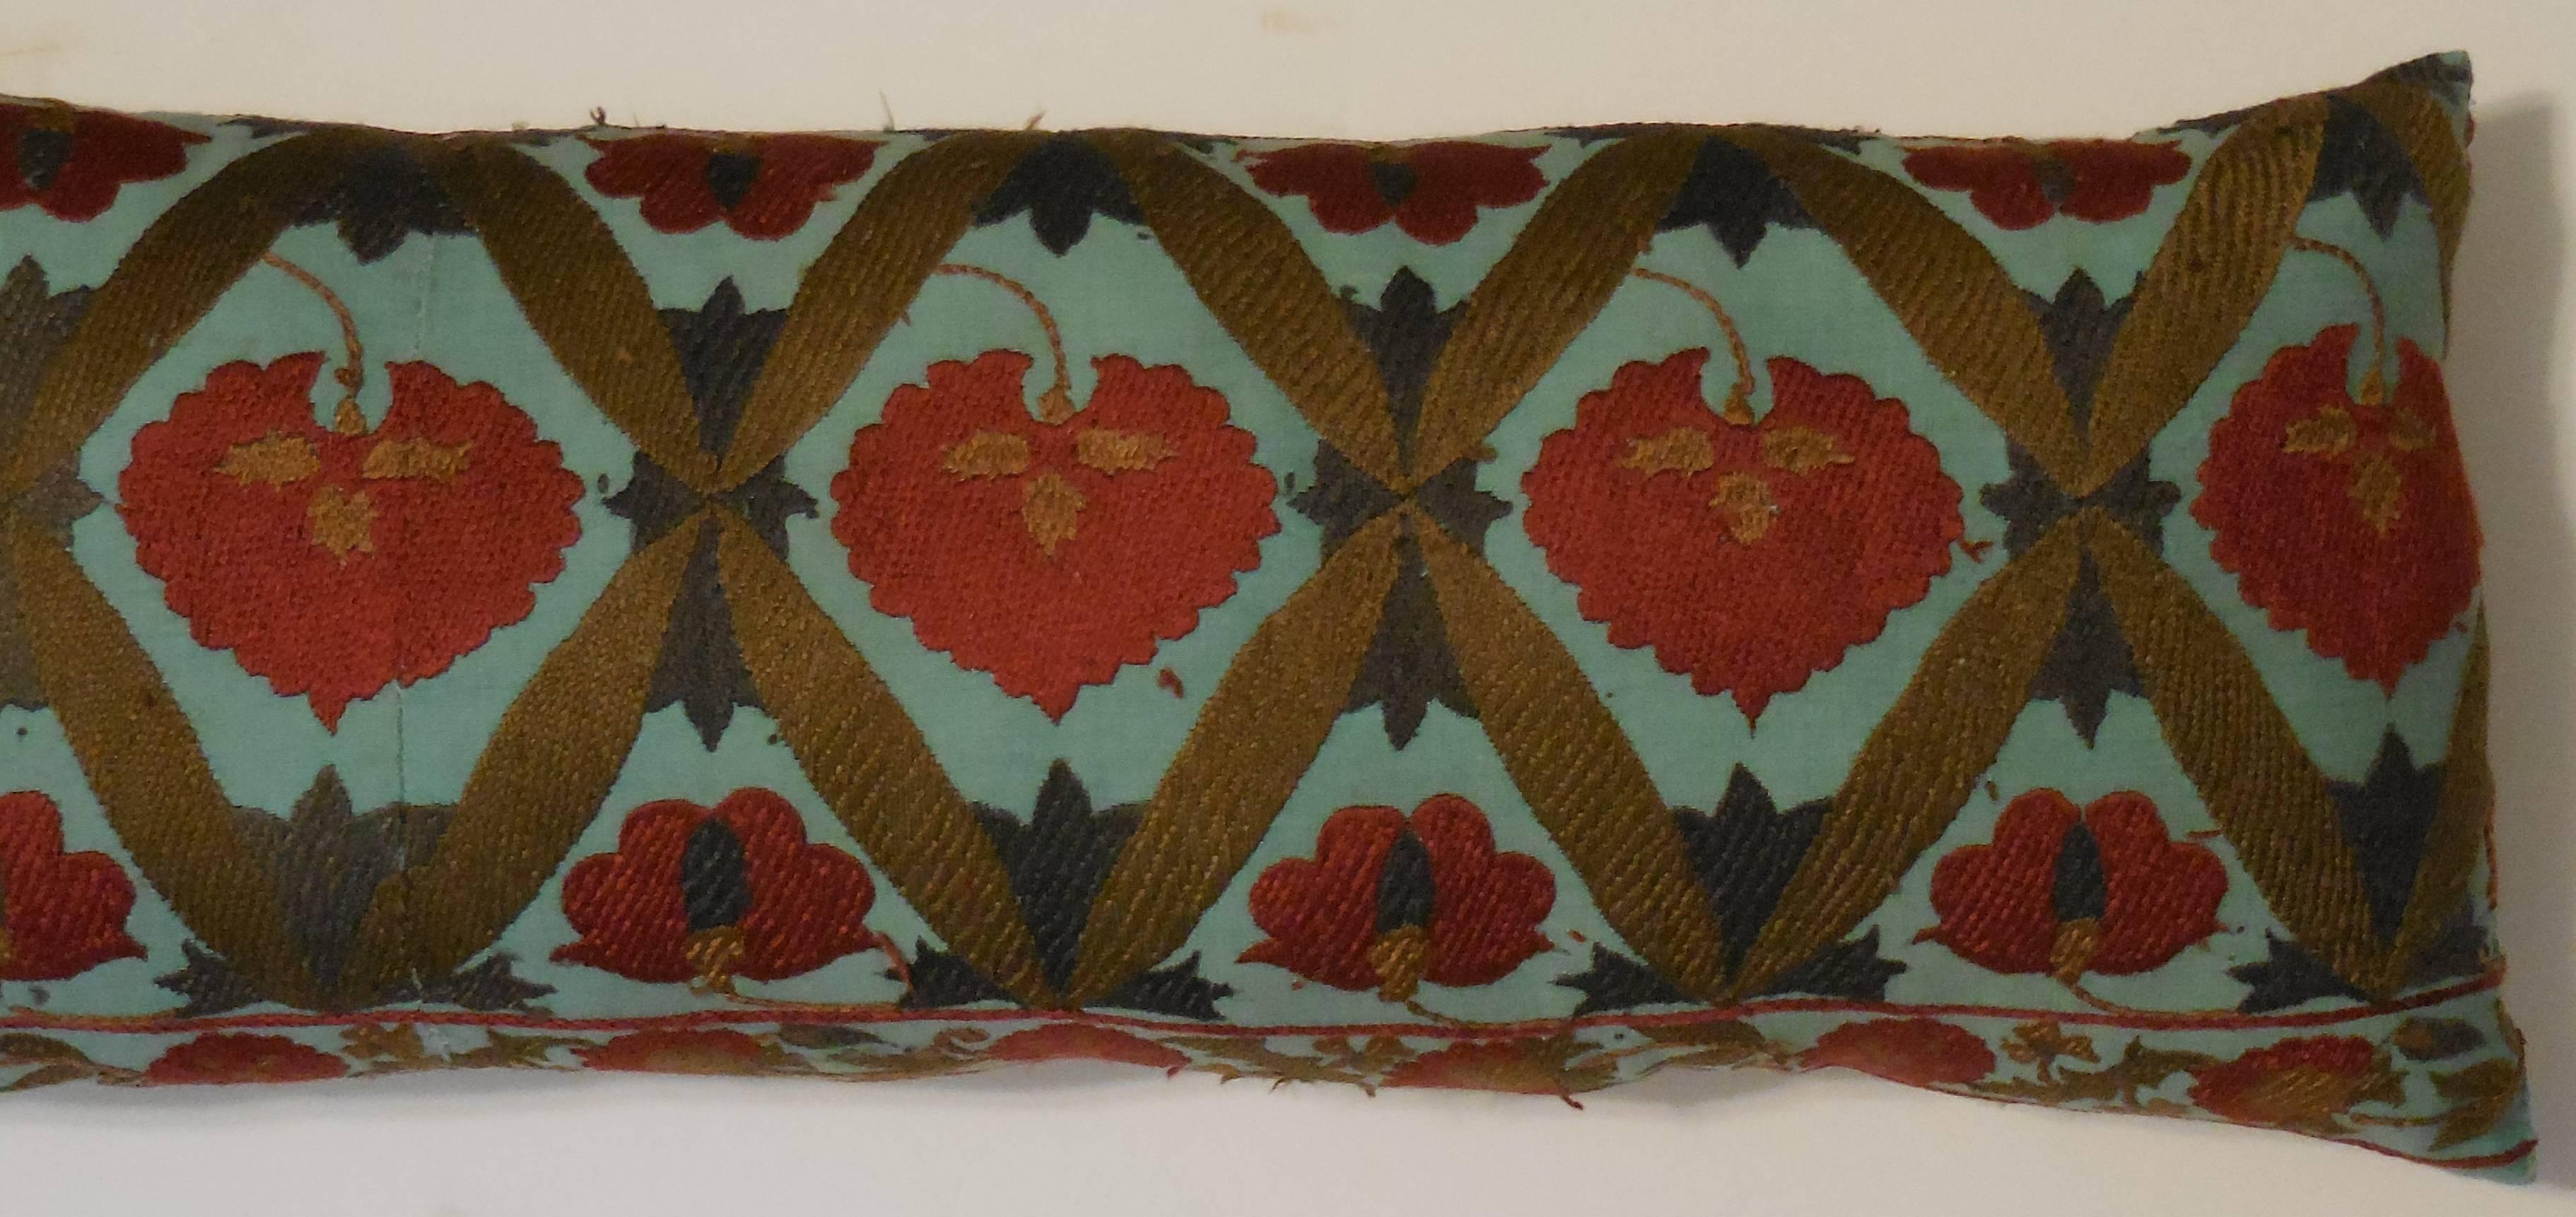 Azerbaijani Pair of Suzani Embroidery Pillows